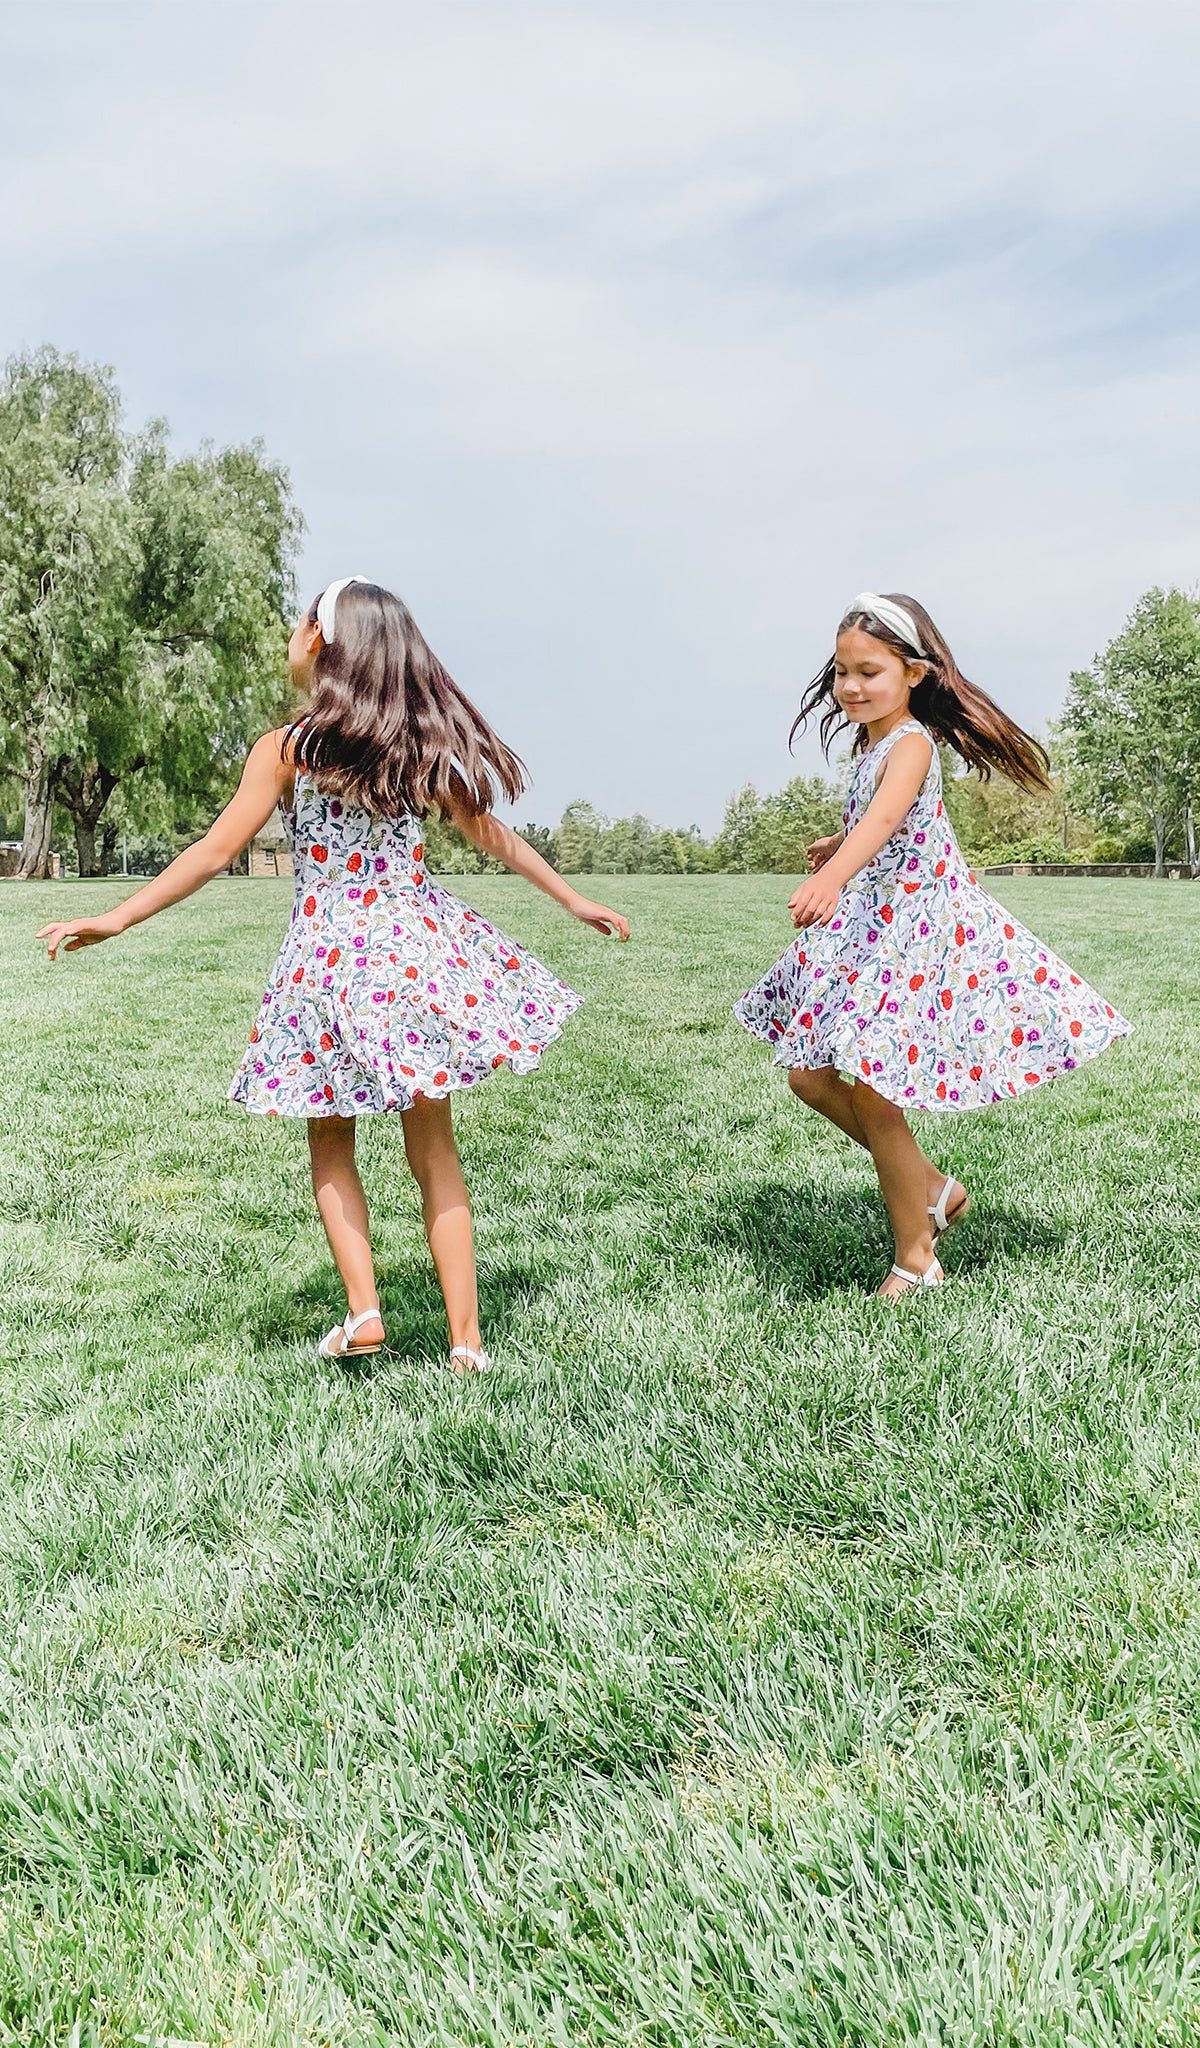 Lucia Kids Twirly Dress in Zinnia worn by two sisters twirling on a grass field.